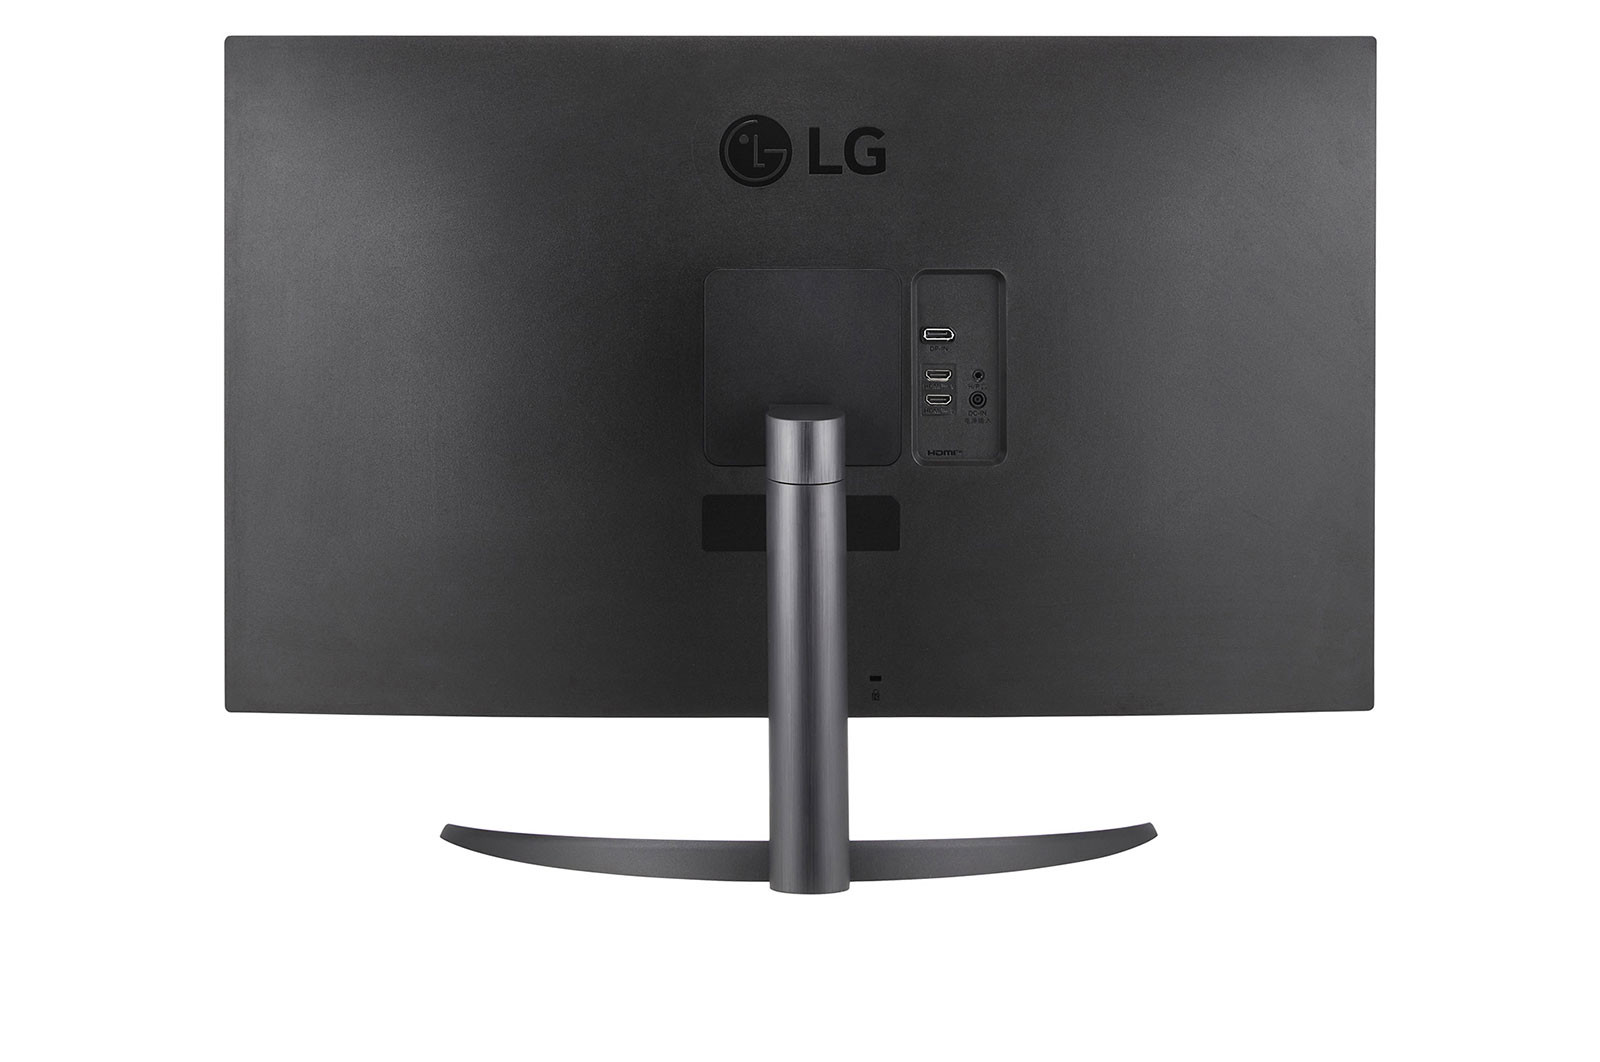 LG-32UR500-B-UHD-4K-HDR-Monitor